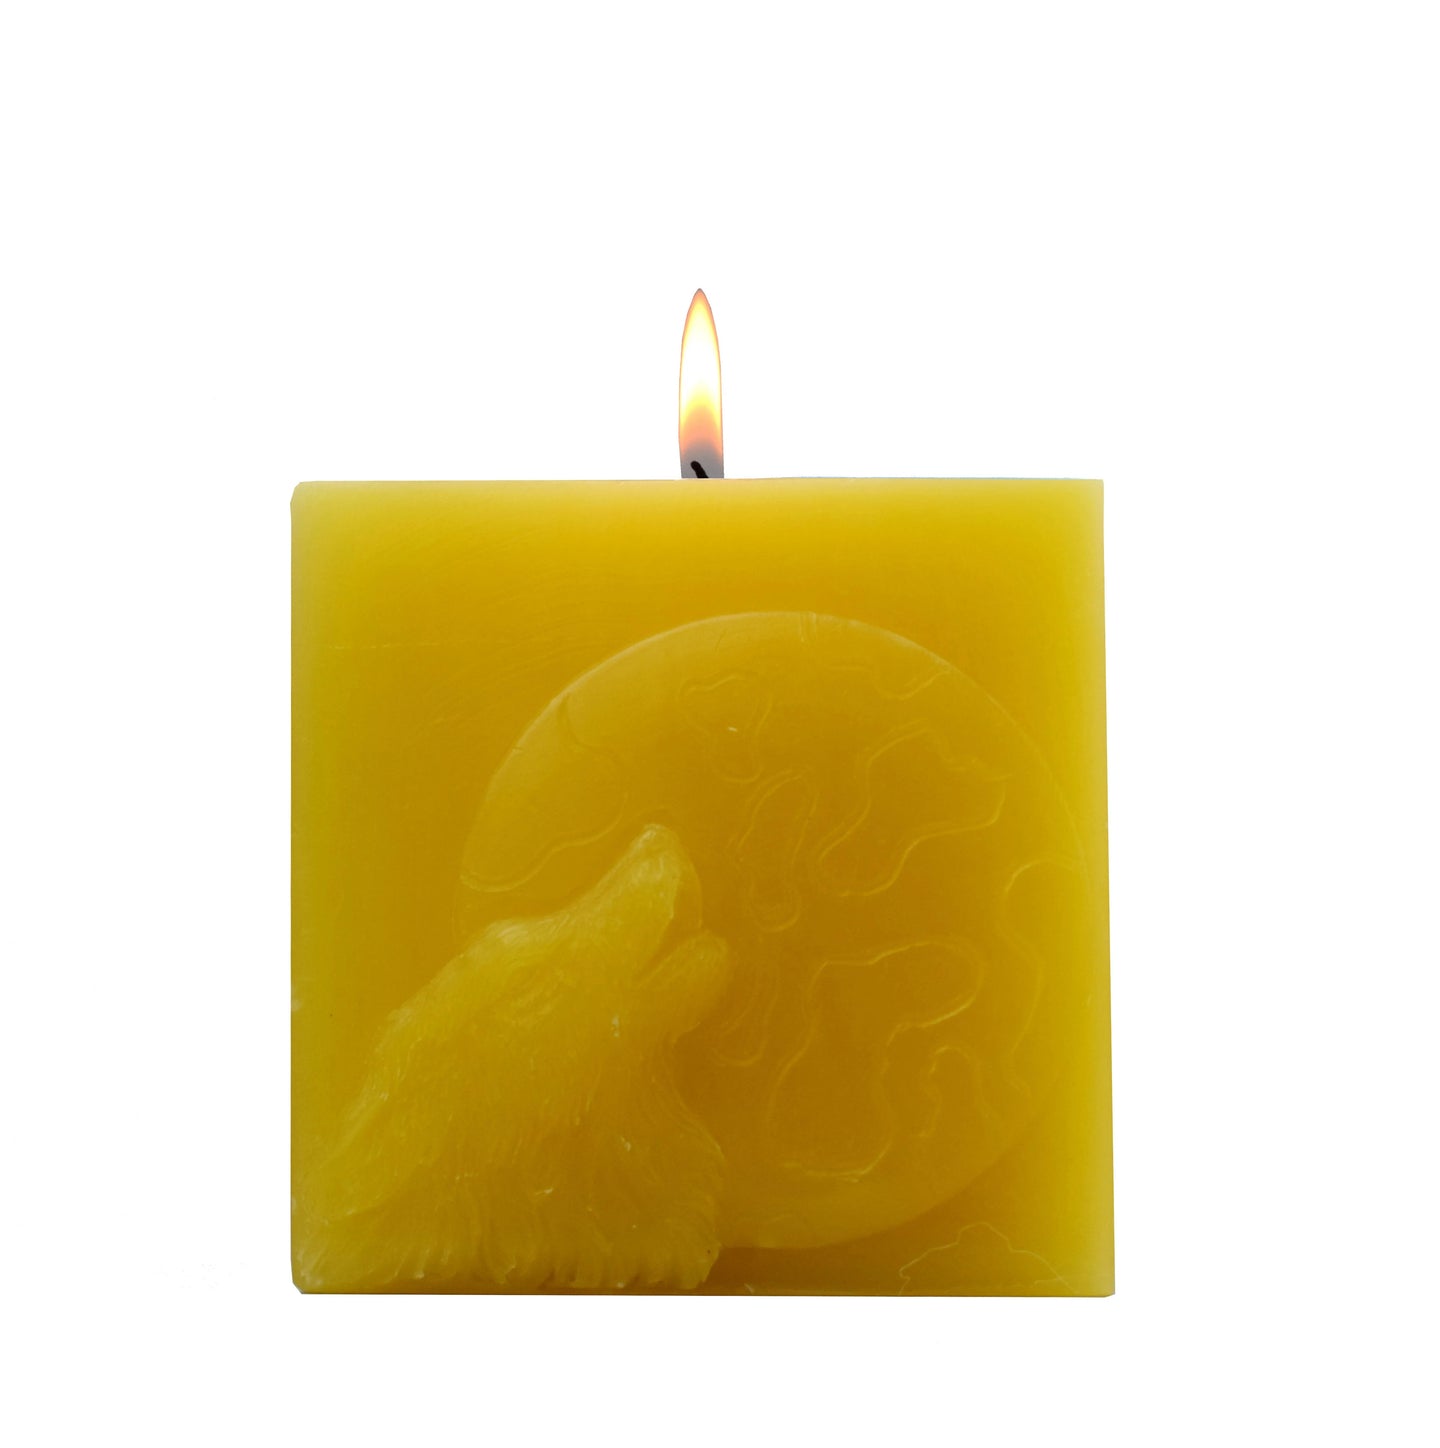 3x ROOGU Lobo Lua Fragrância Vela de Baunilha Citrus Amarelo Cube Vela